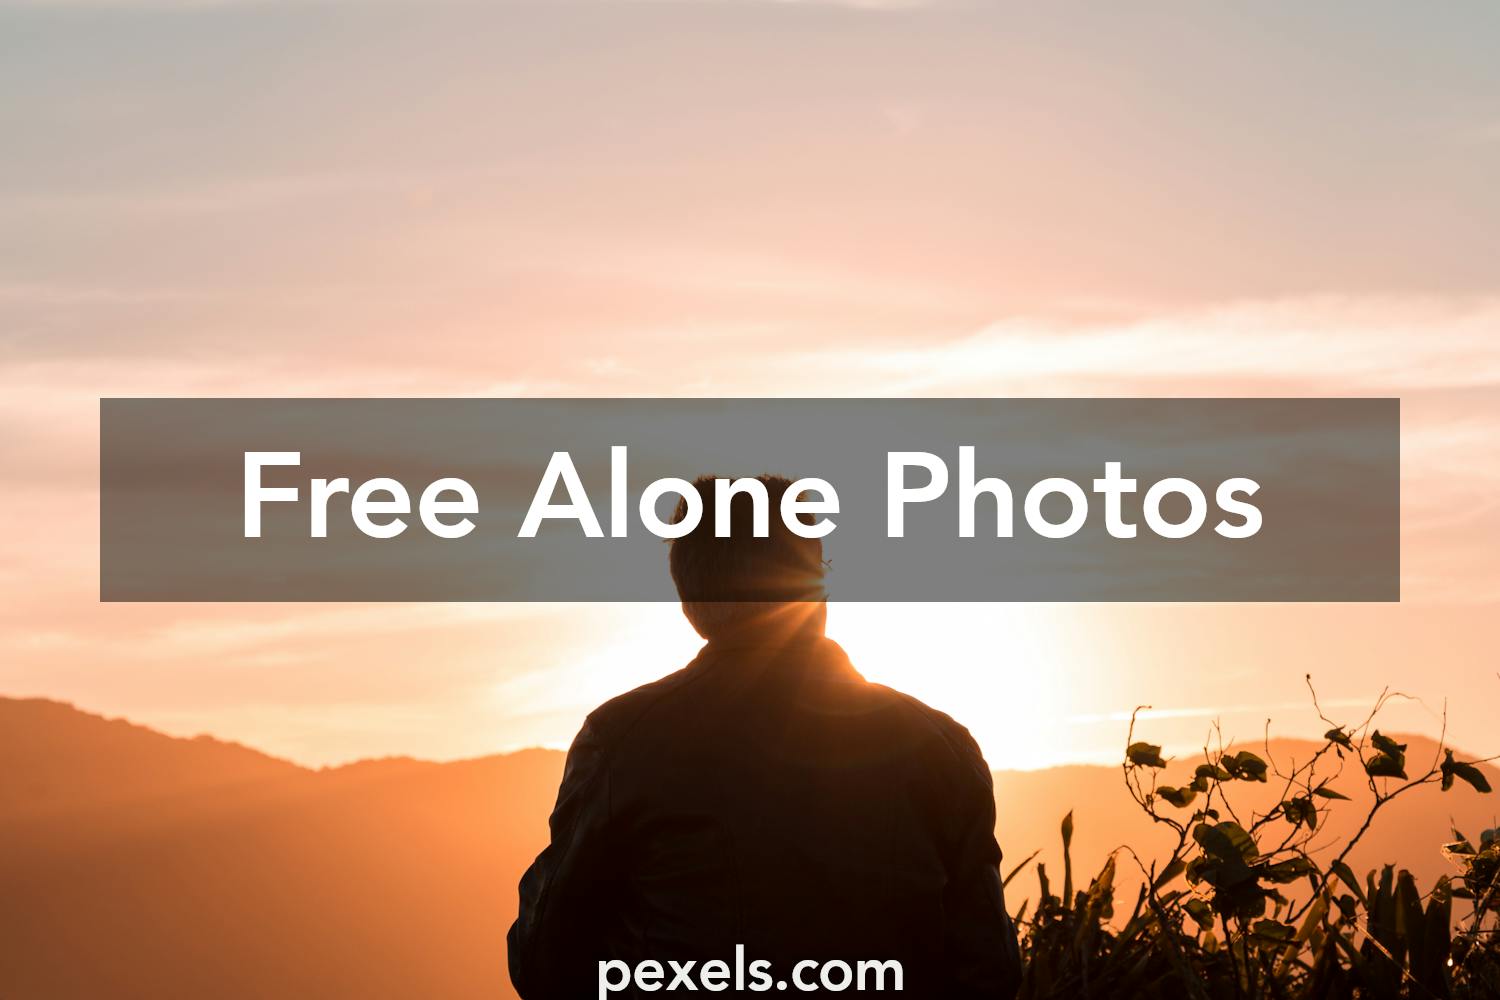 Alone Photos Pexels Free Stock Photos